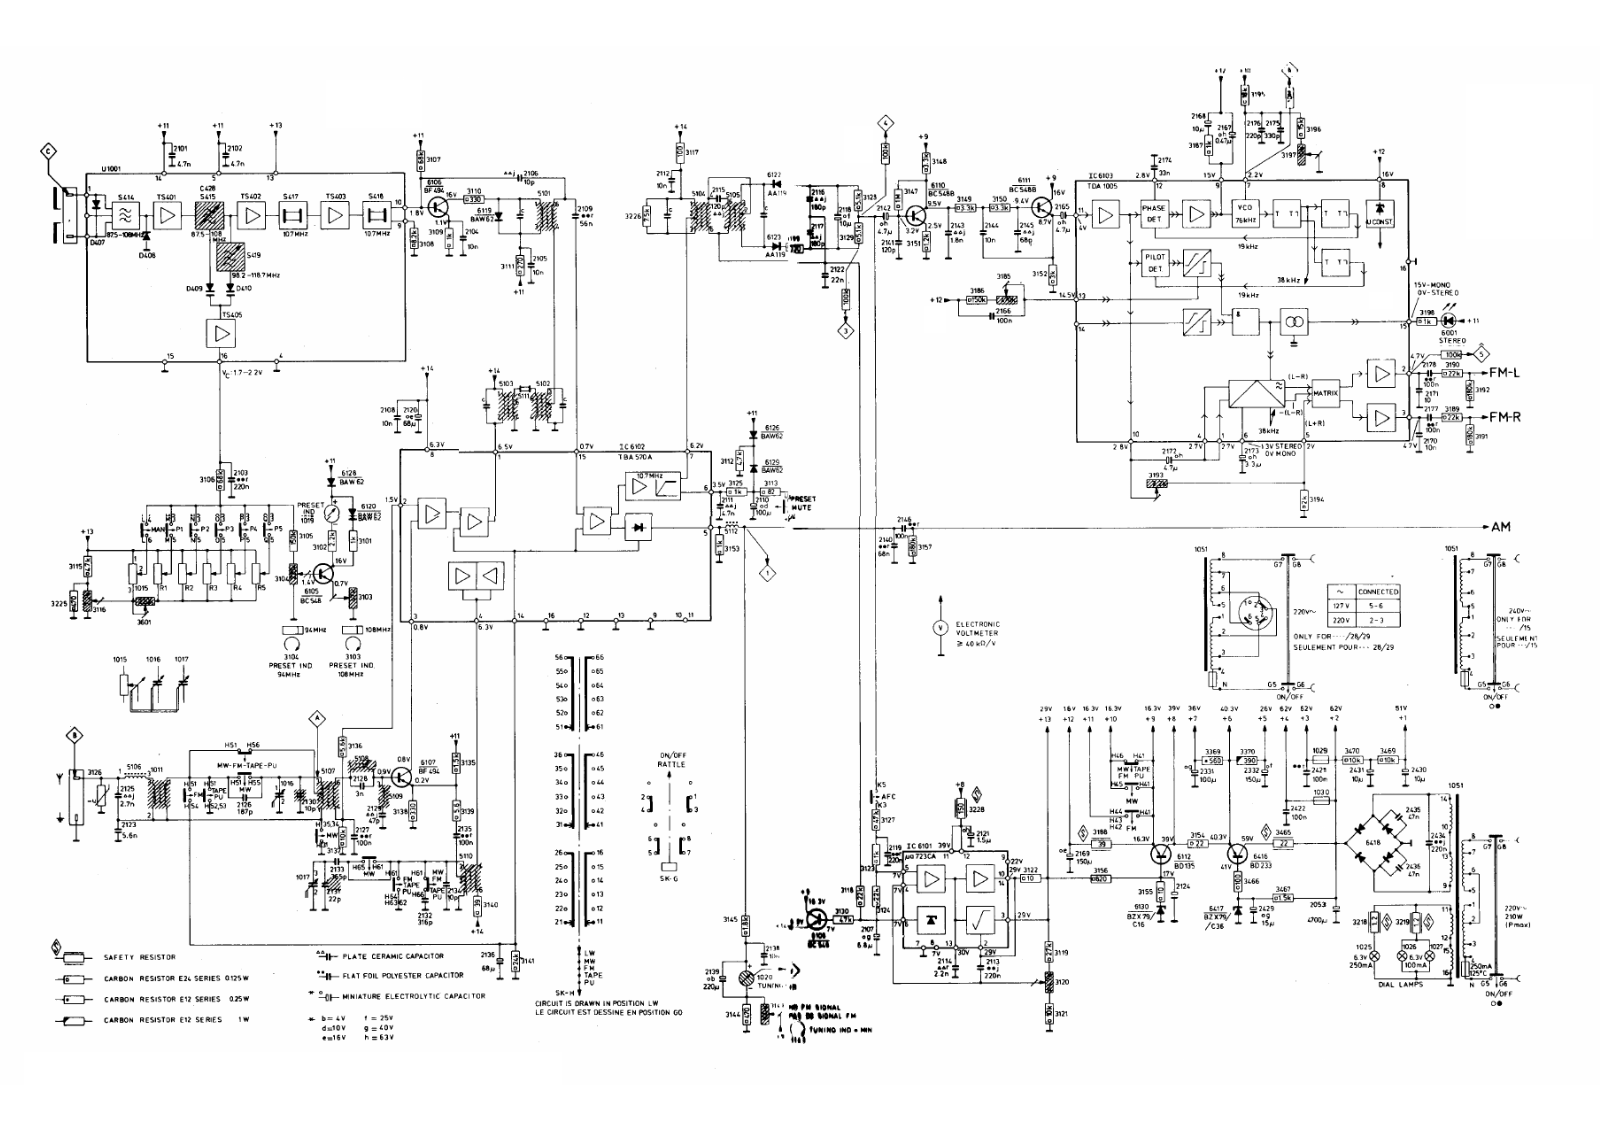 Philips ta22ah796 schematic